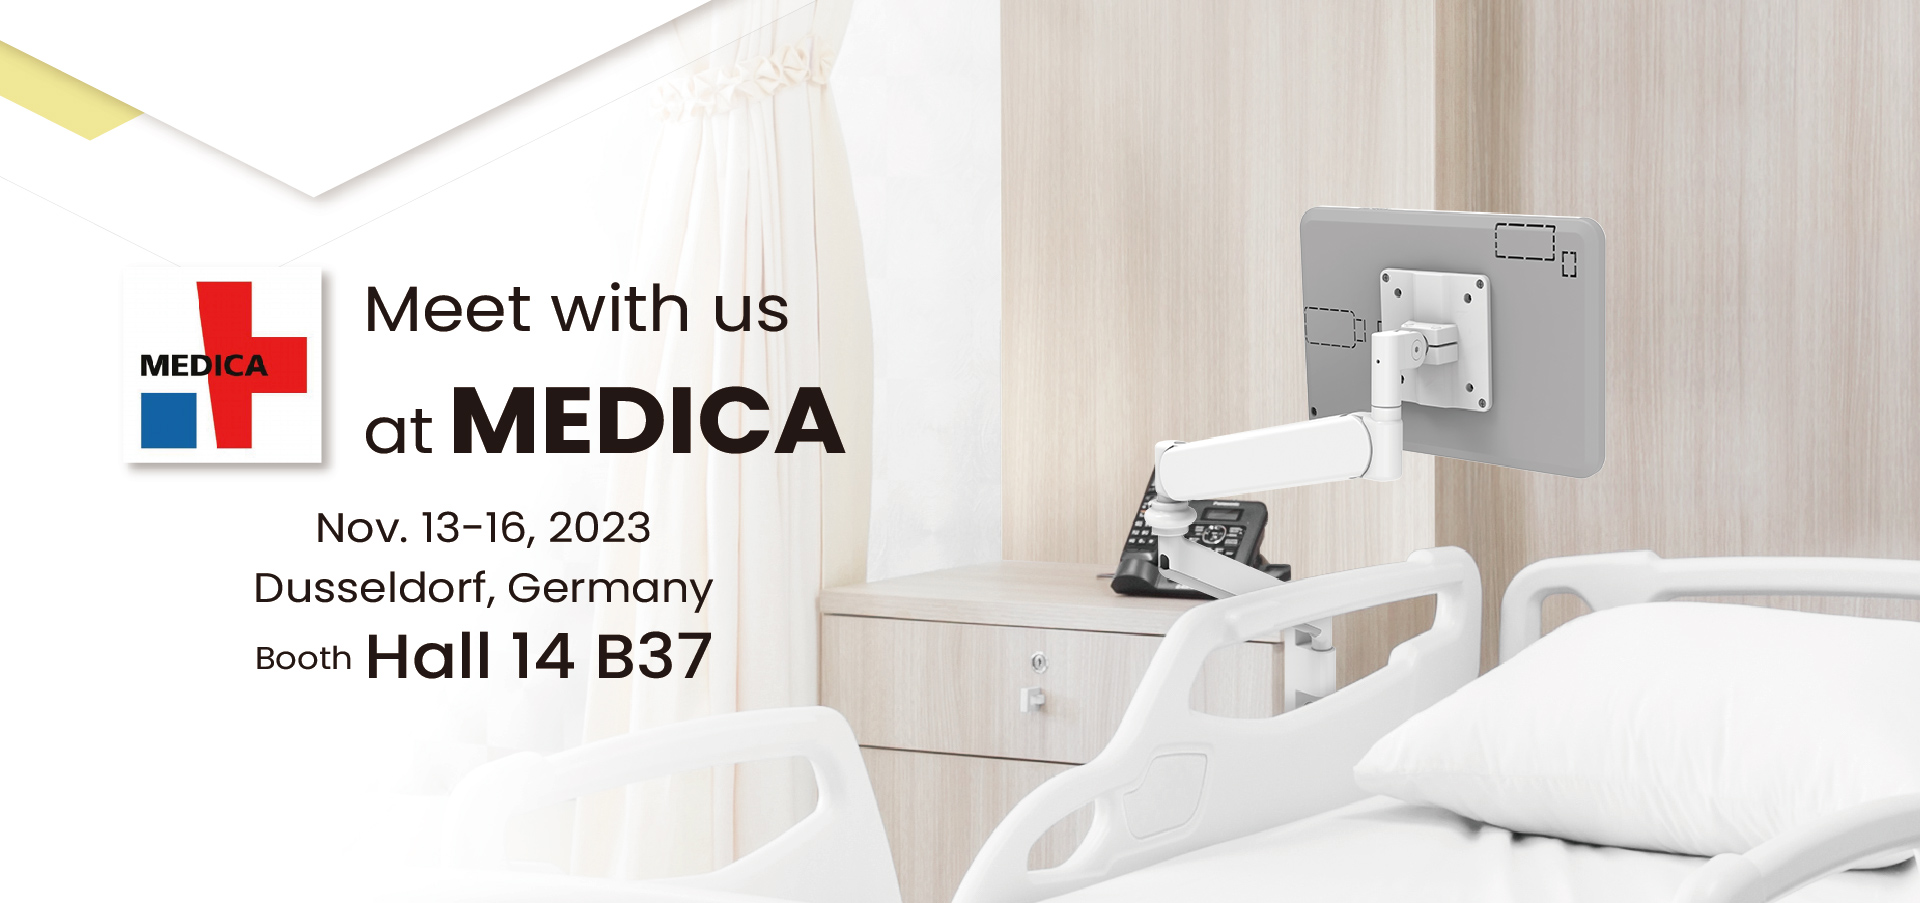 INVITATION 2023 Medica / Dusseldorf, Germany, Nov. 13 - 16, 2023